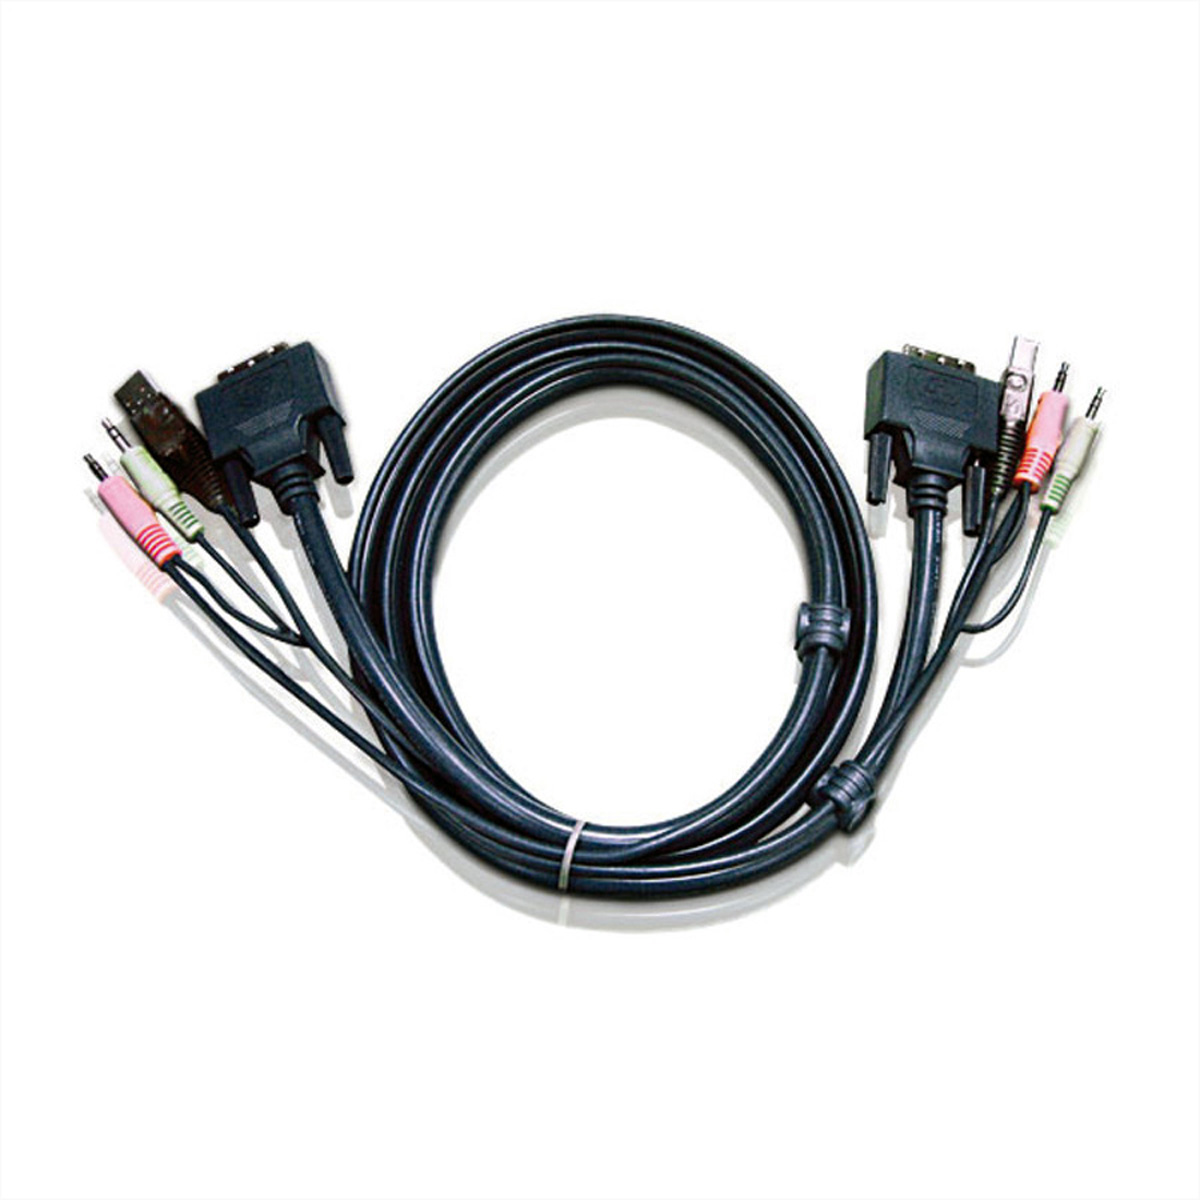 ATEN 2L-7D03UI KVM Kabel DVI-I (Single Link), USB, Audio, schwarz, 3 m